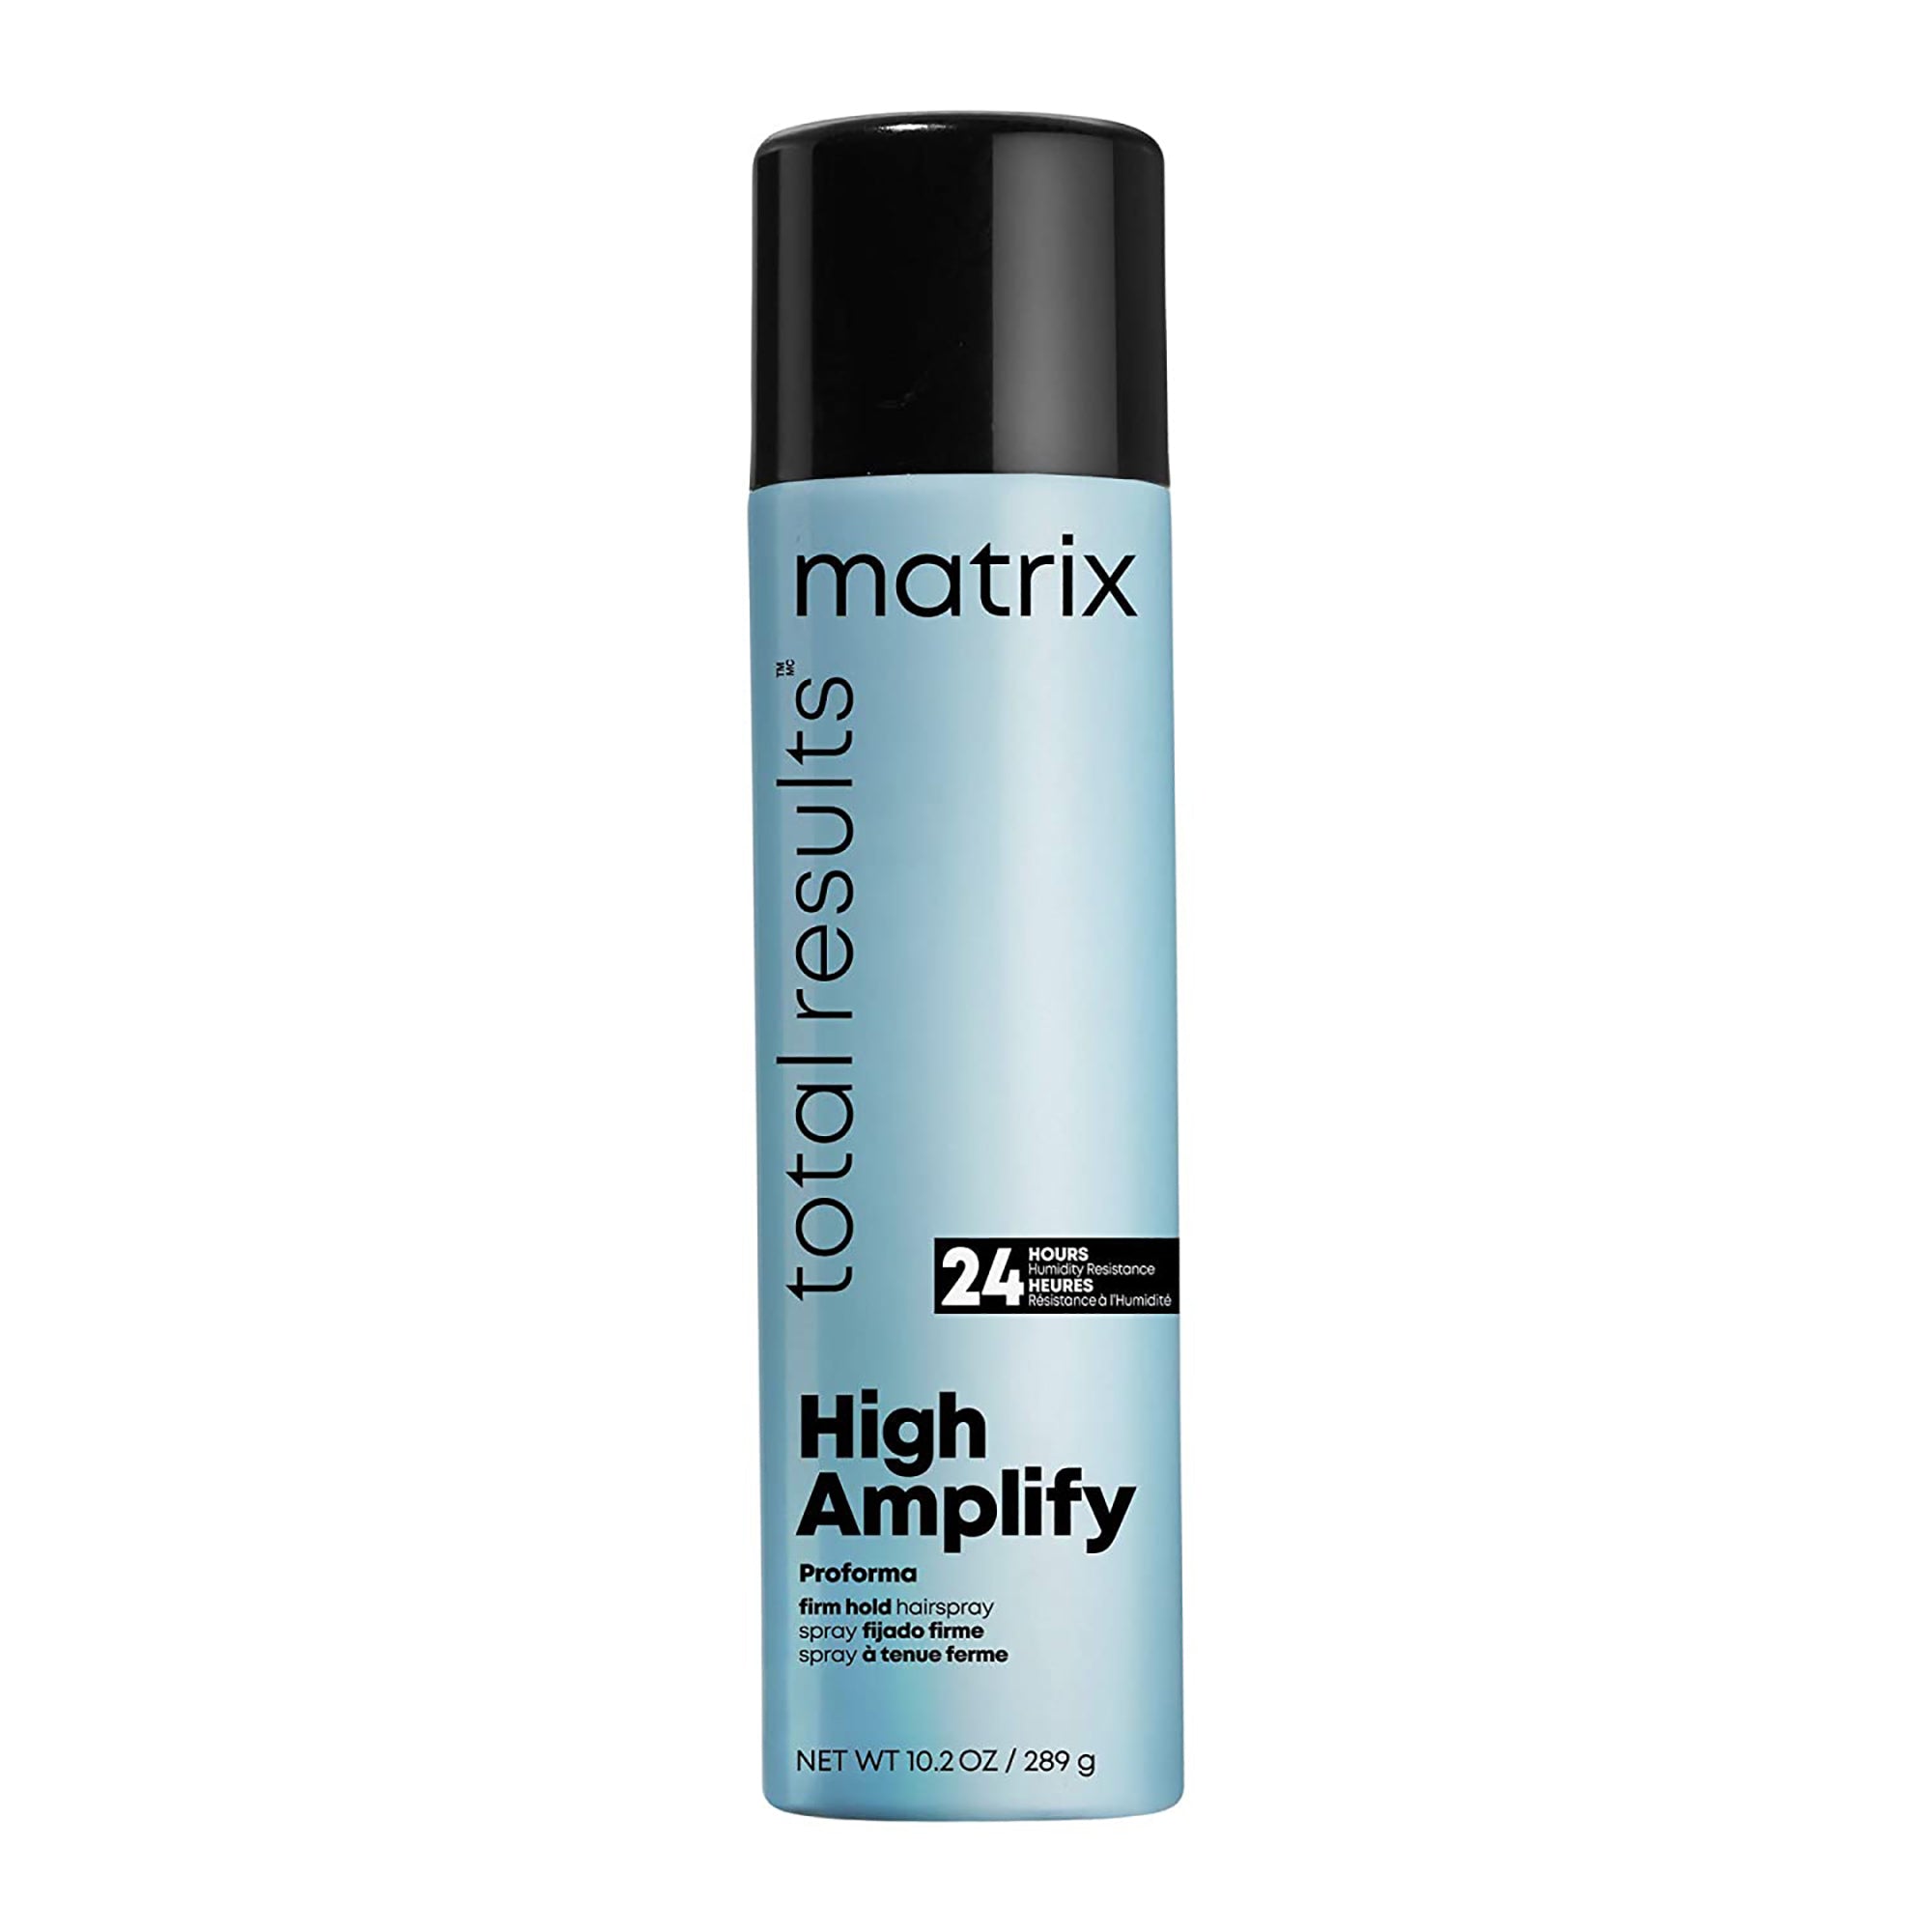 Matrix High Amplify Proforma Hairspray / 10 OZ